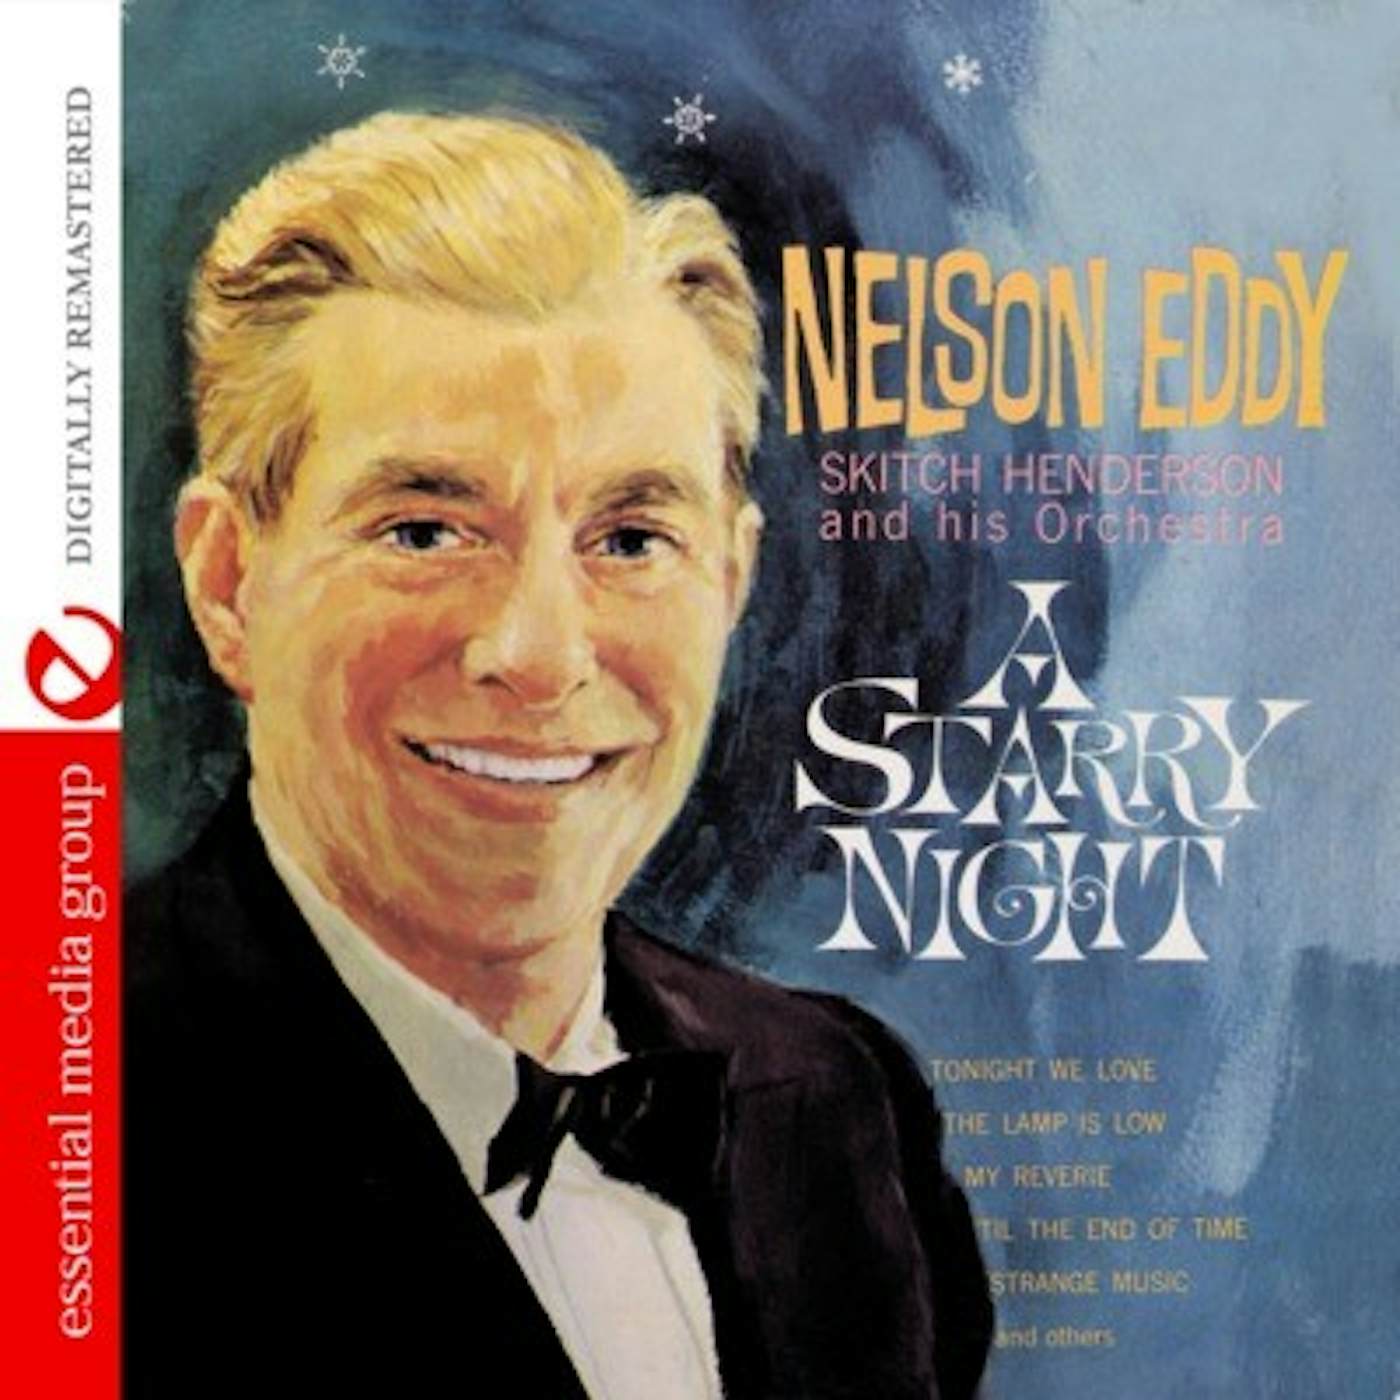 Nelson Eddy STARRY NIGHT CD